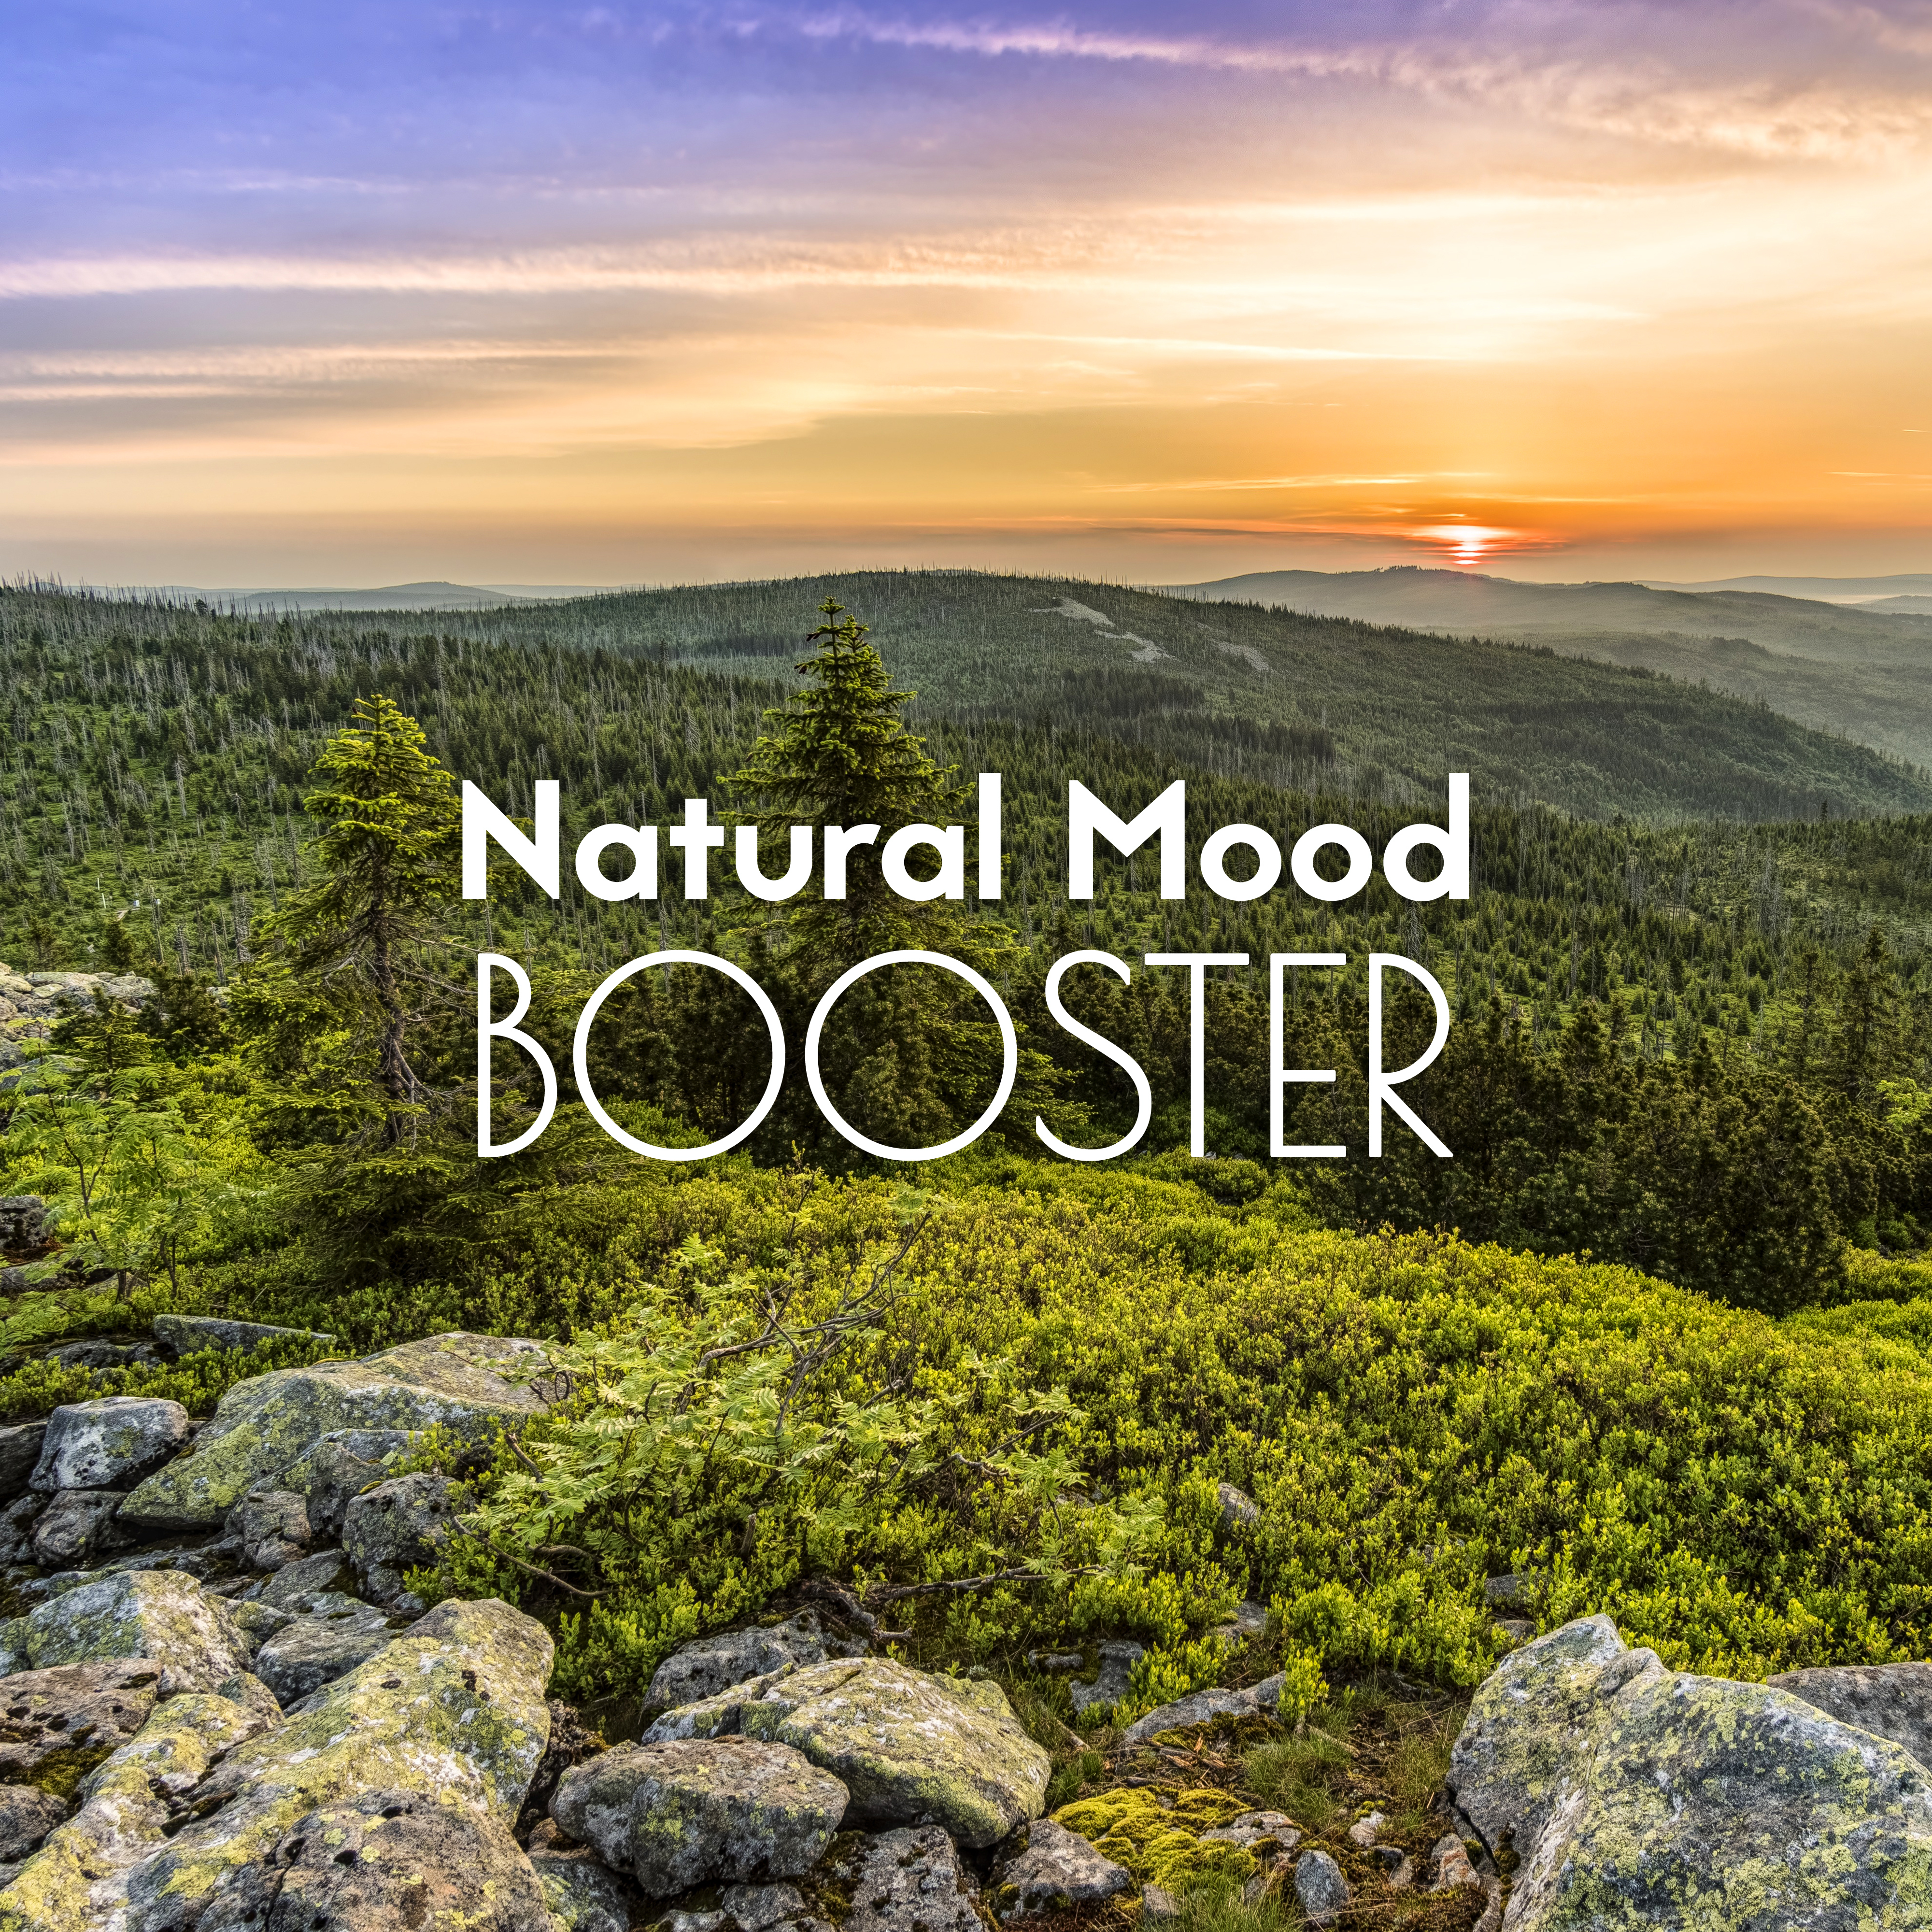 Natural Mood Booster